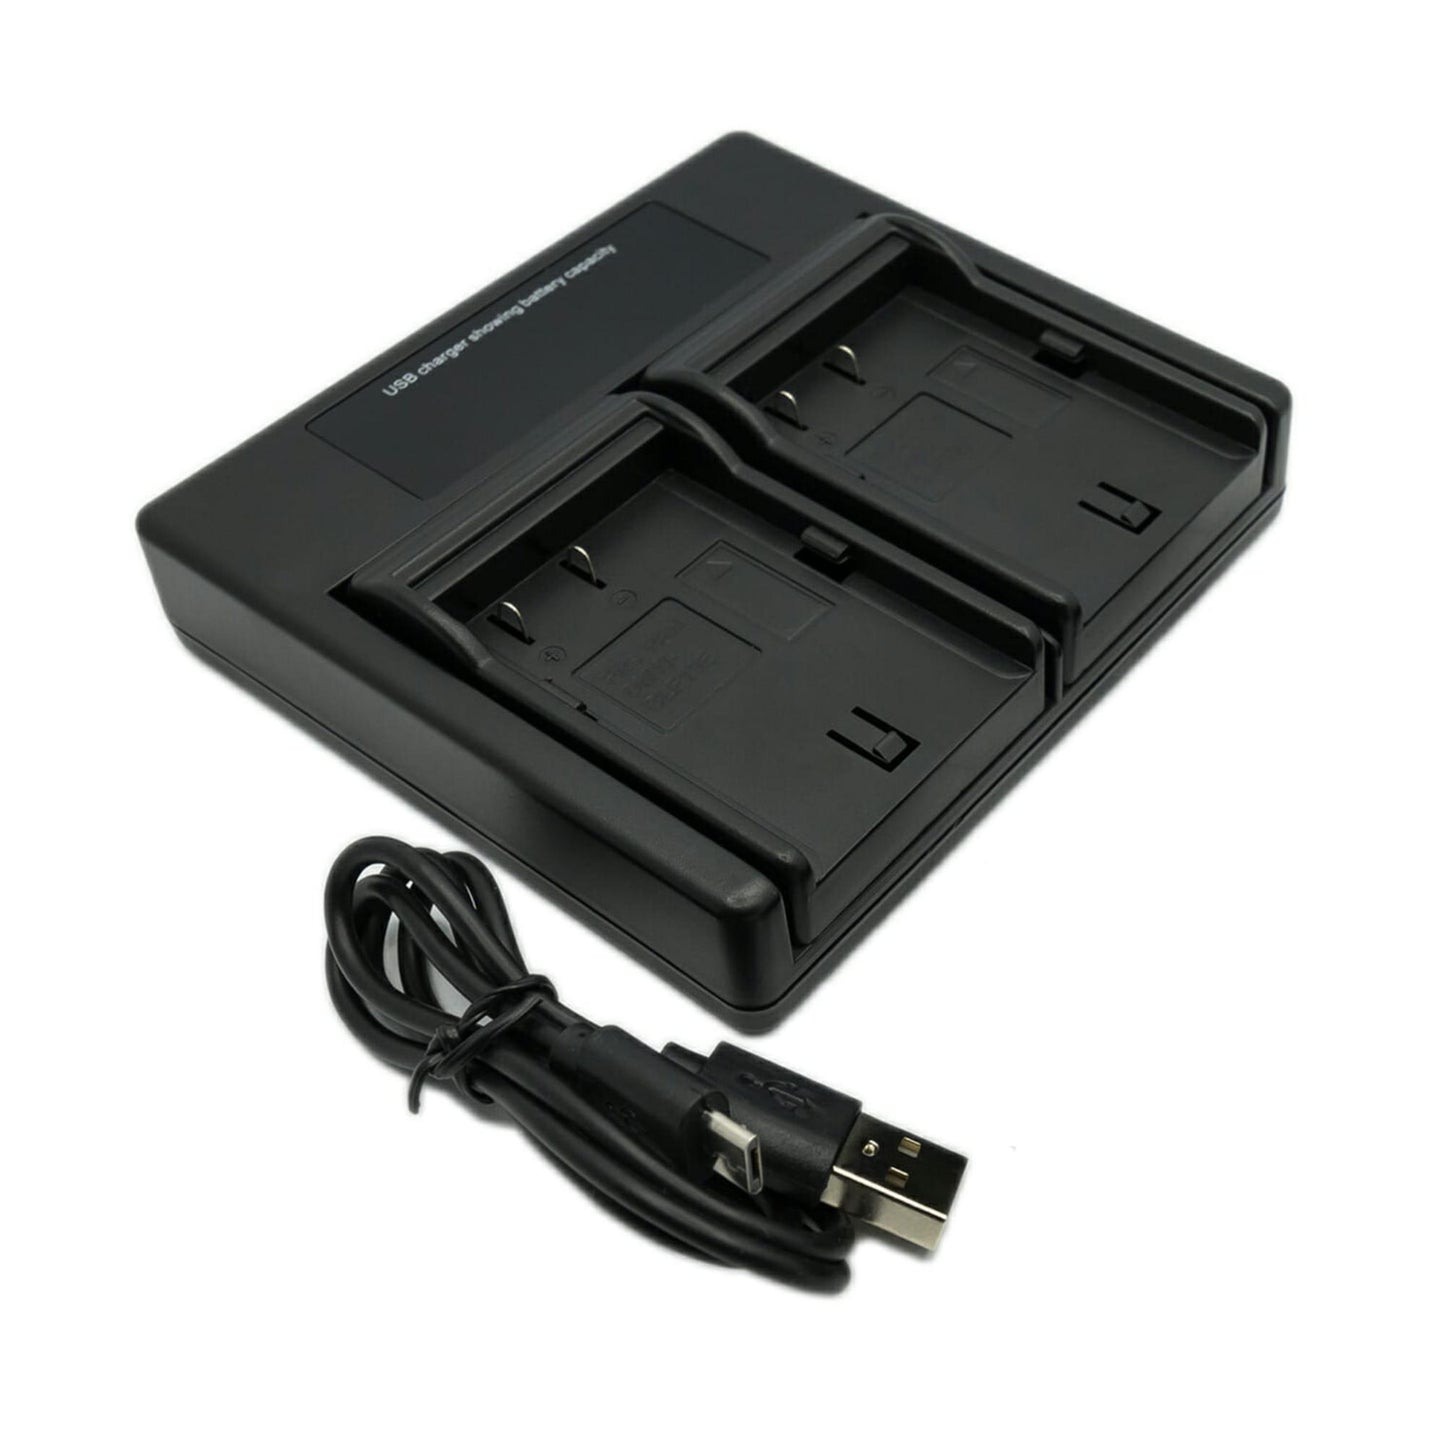 Hridz DMW-BLF19 Dual Charger For Panasonic GH3 & GH4 camera batteries